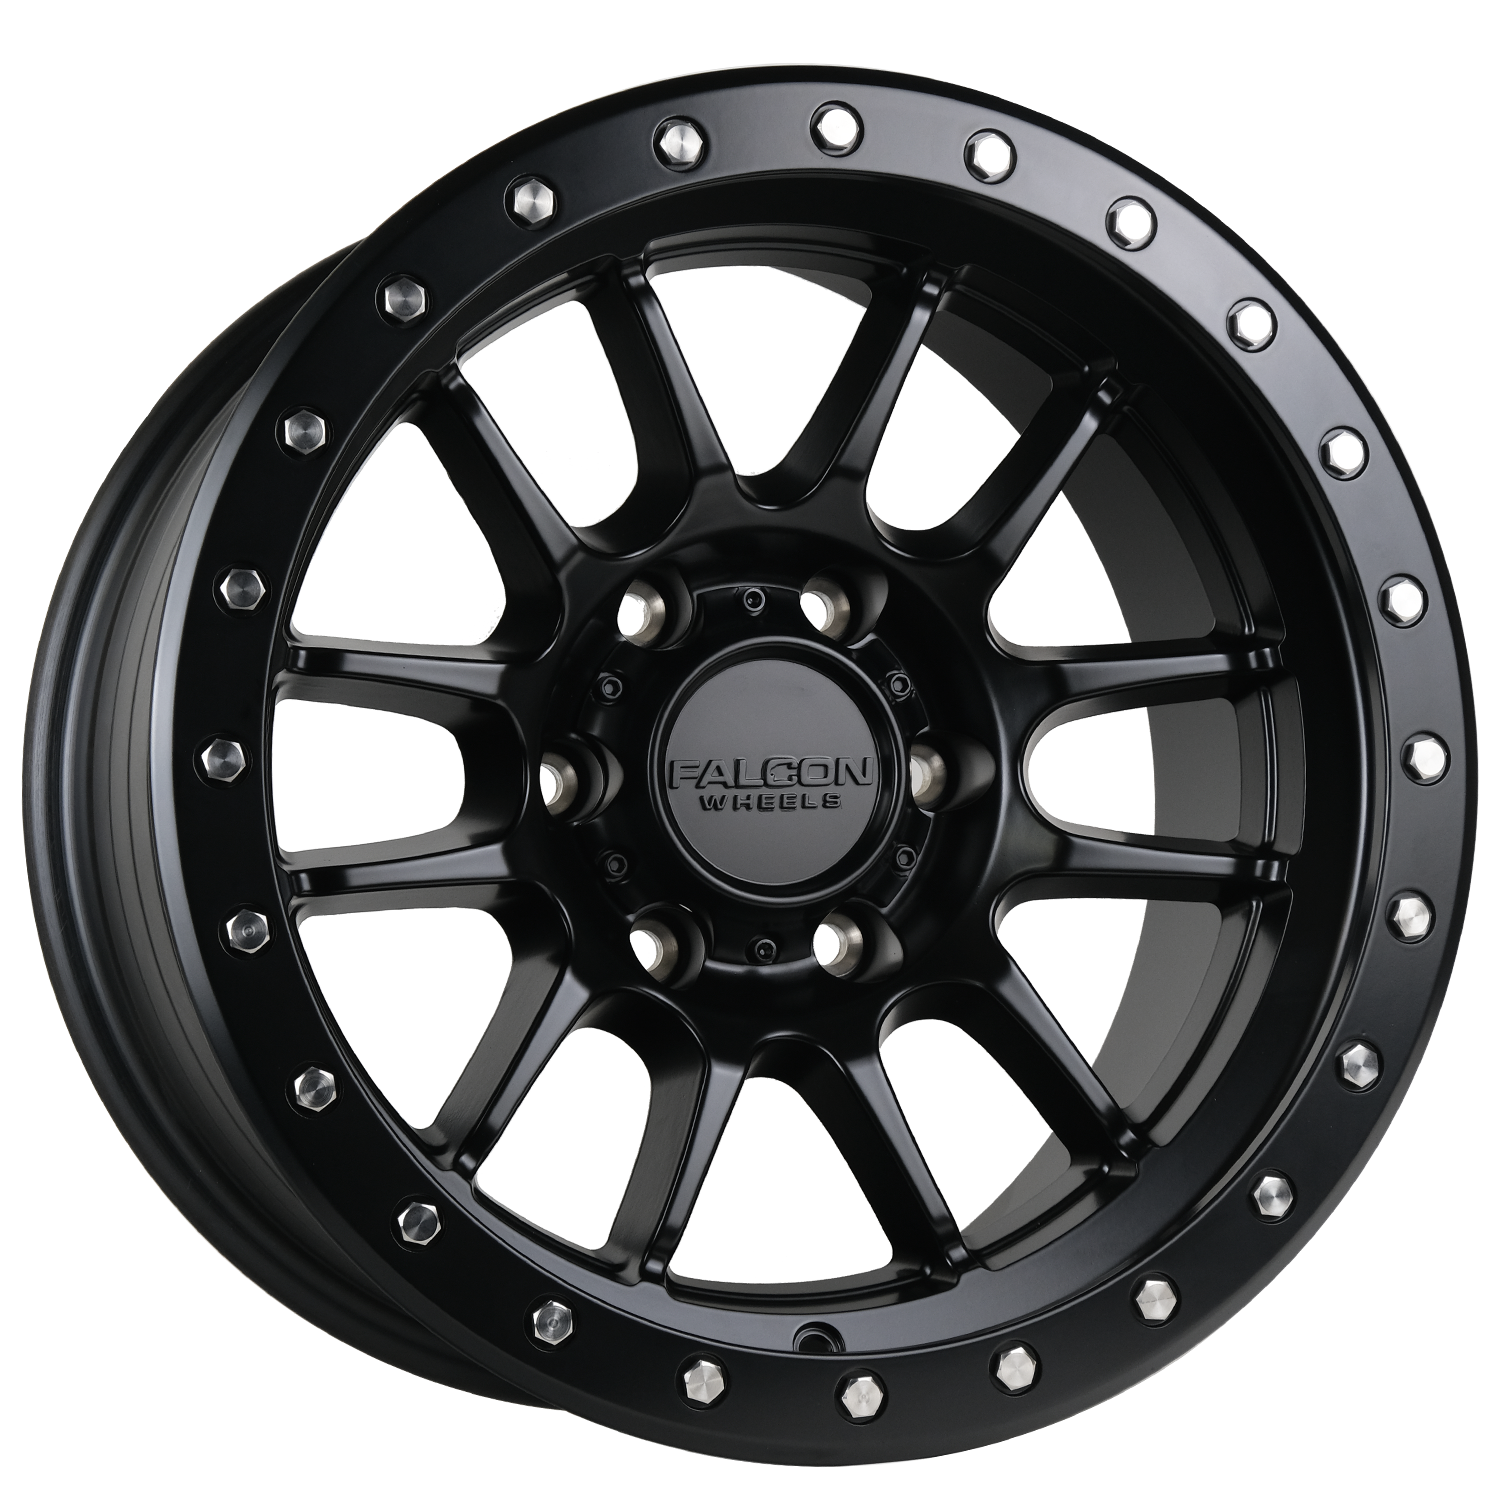 T7 - Matte Black 17x9 - Premium Wheels from Falcon Off-Road Wheels - Just $265.50! Shop now at Falcon Off-Road Wheels 